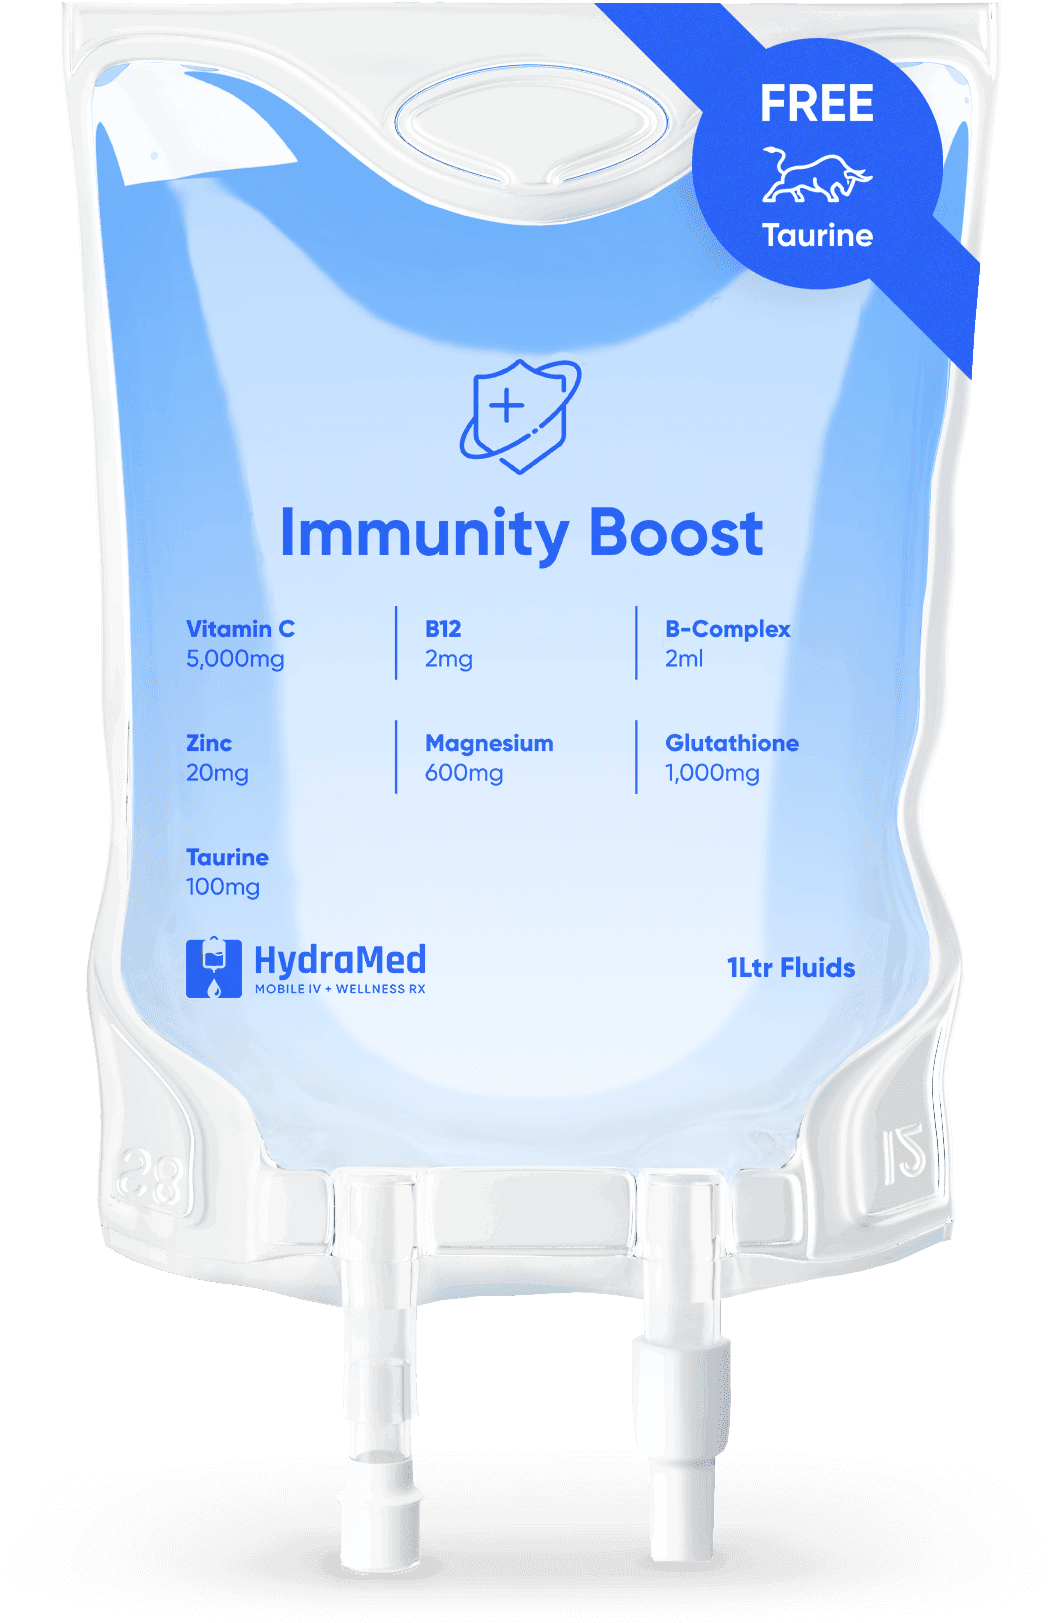 Immunity Boost